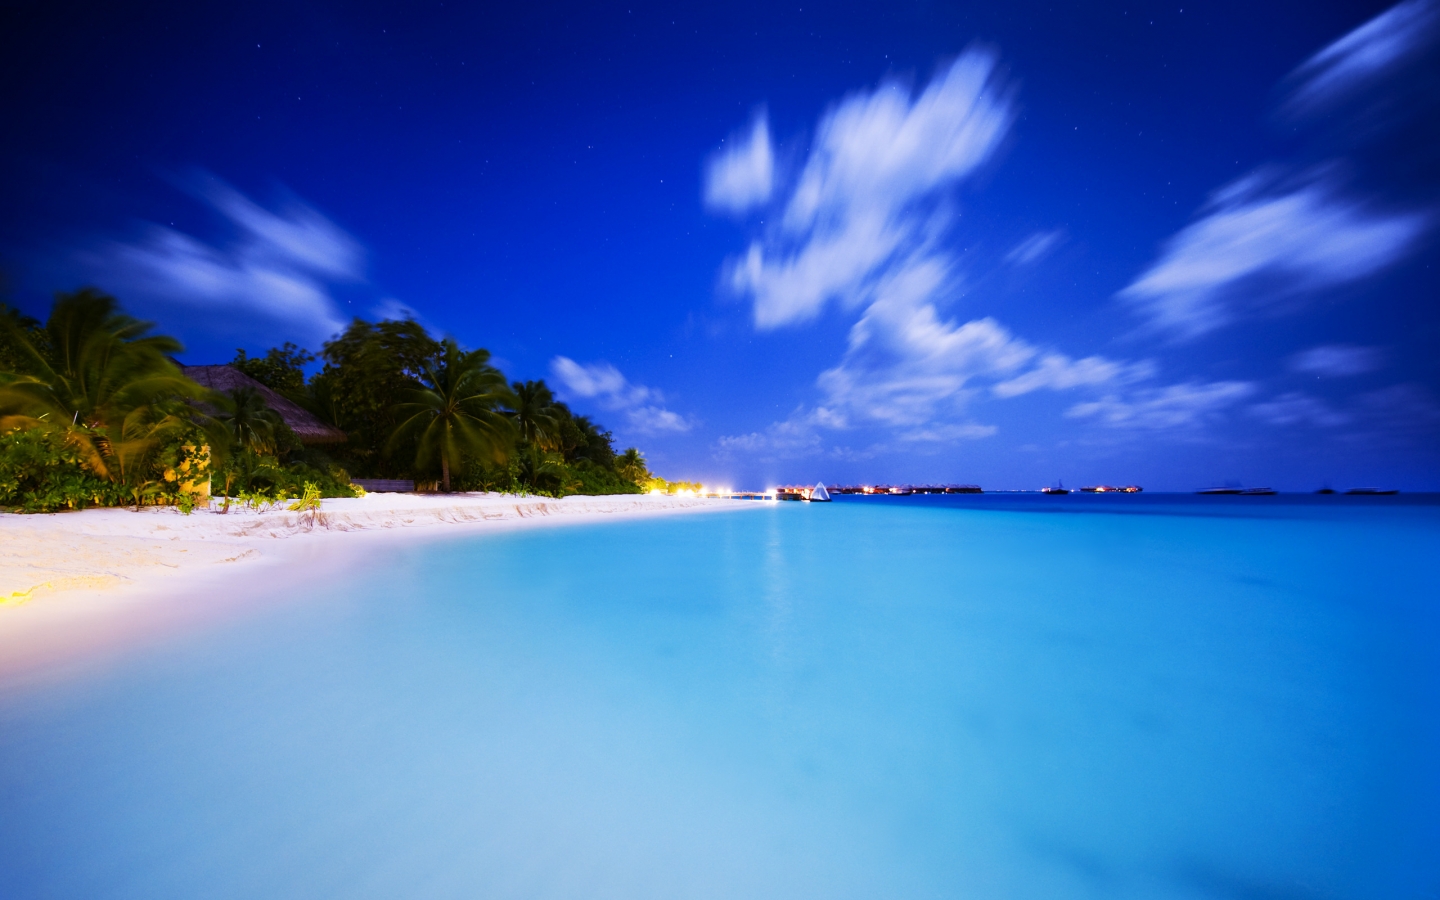 Maldivian Night for 1440 x 900 widescreen resolution